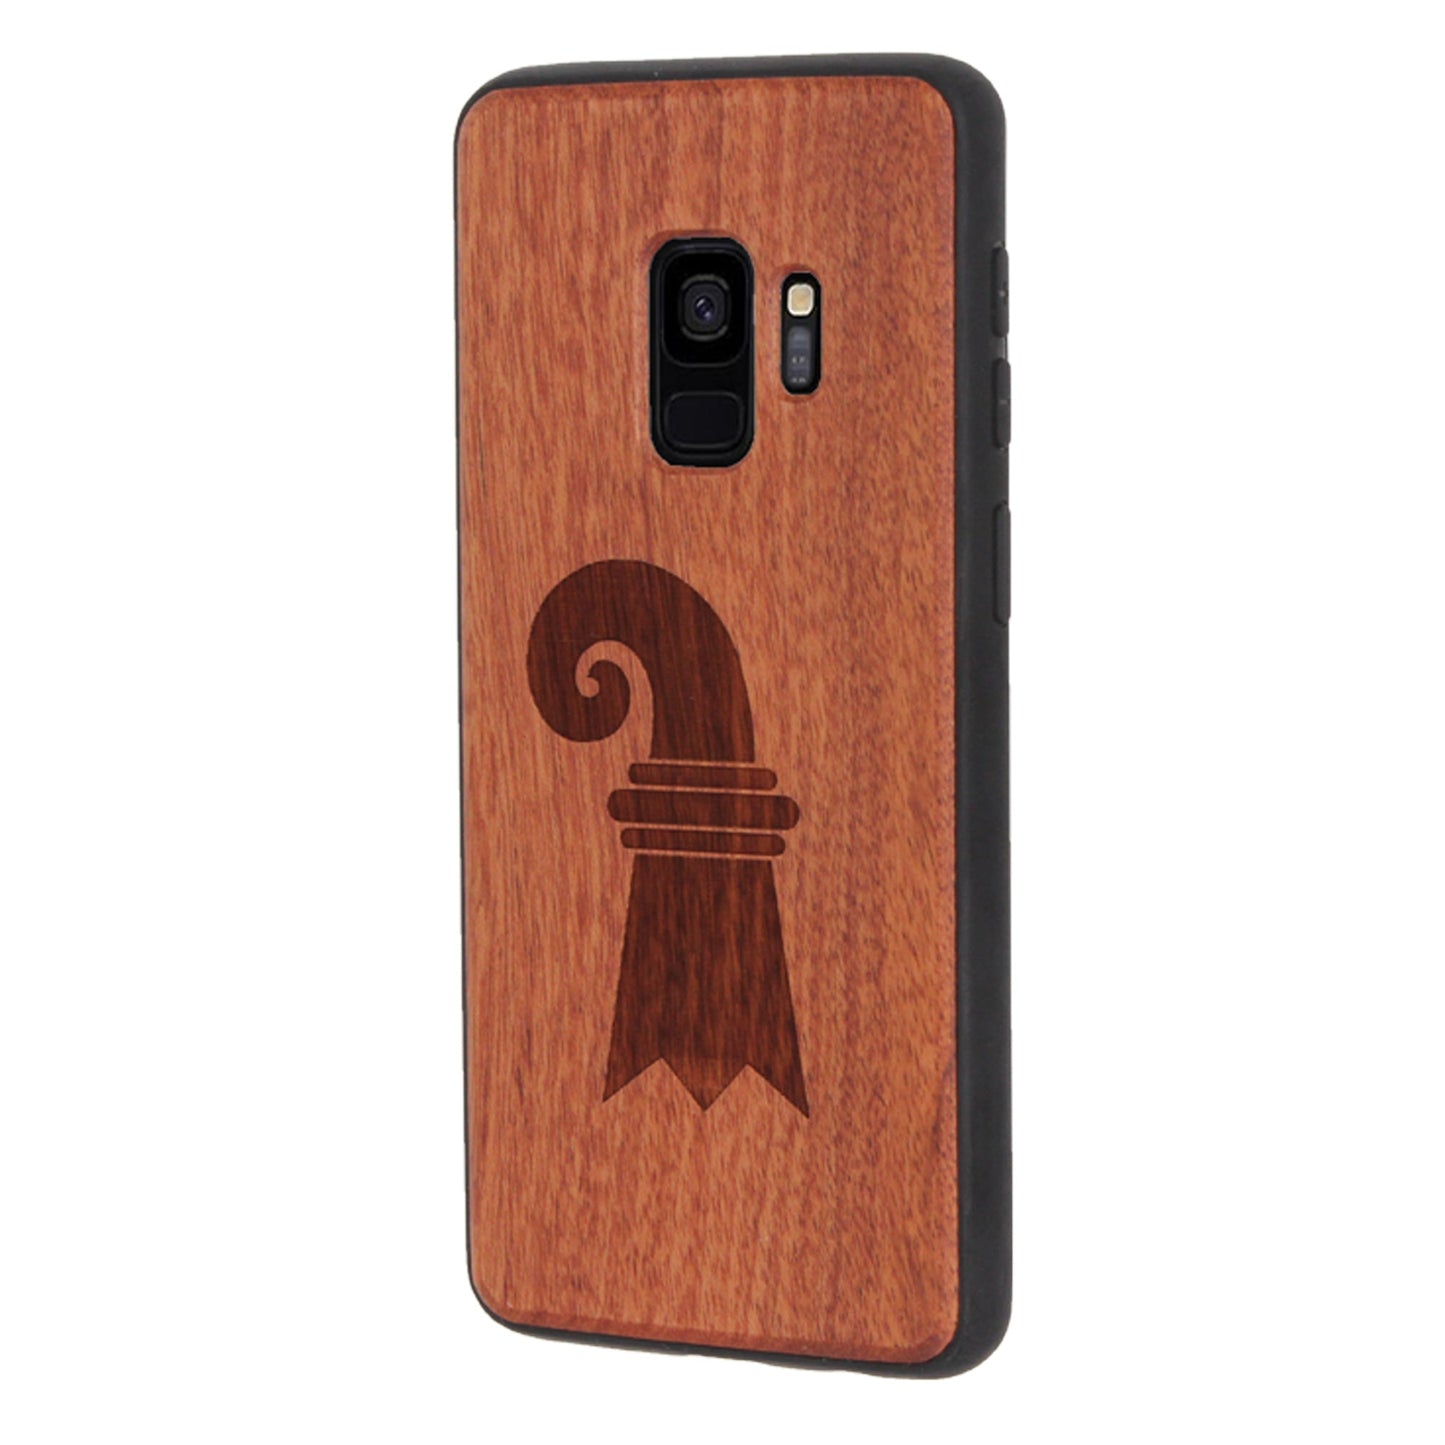 Baslerstab Eden case made of rosewood for Samsung Galaxy S9